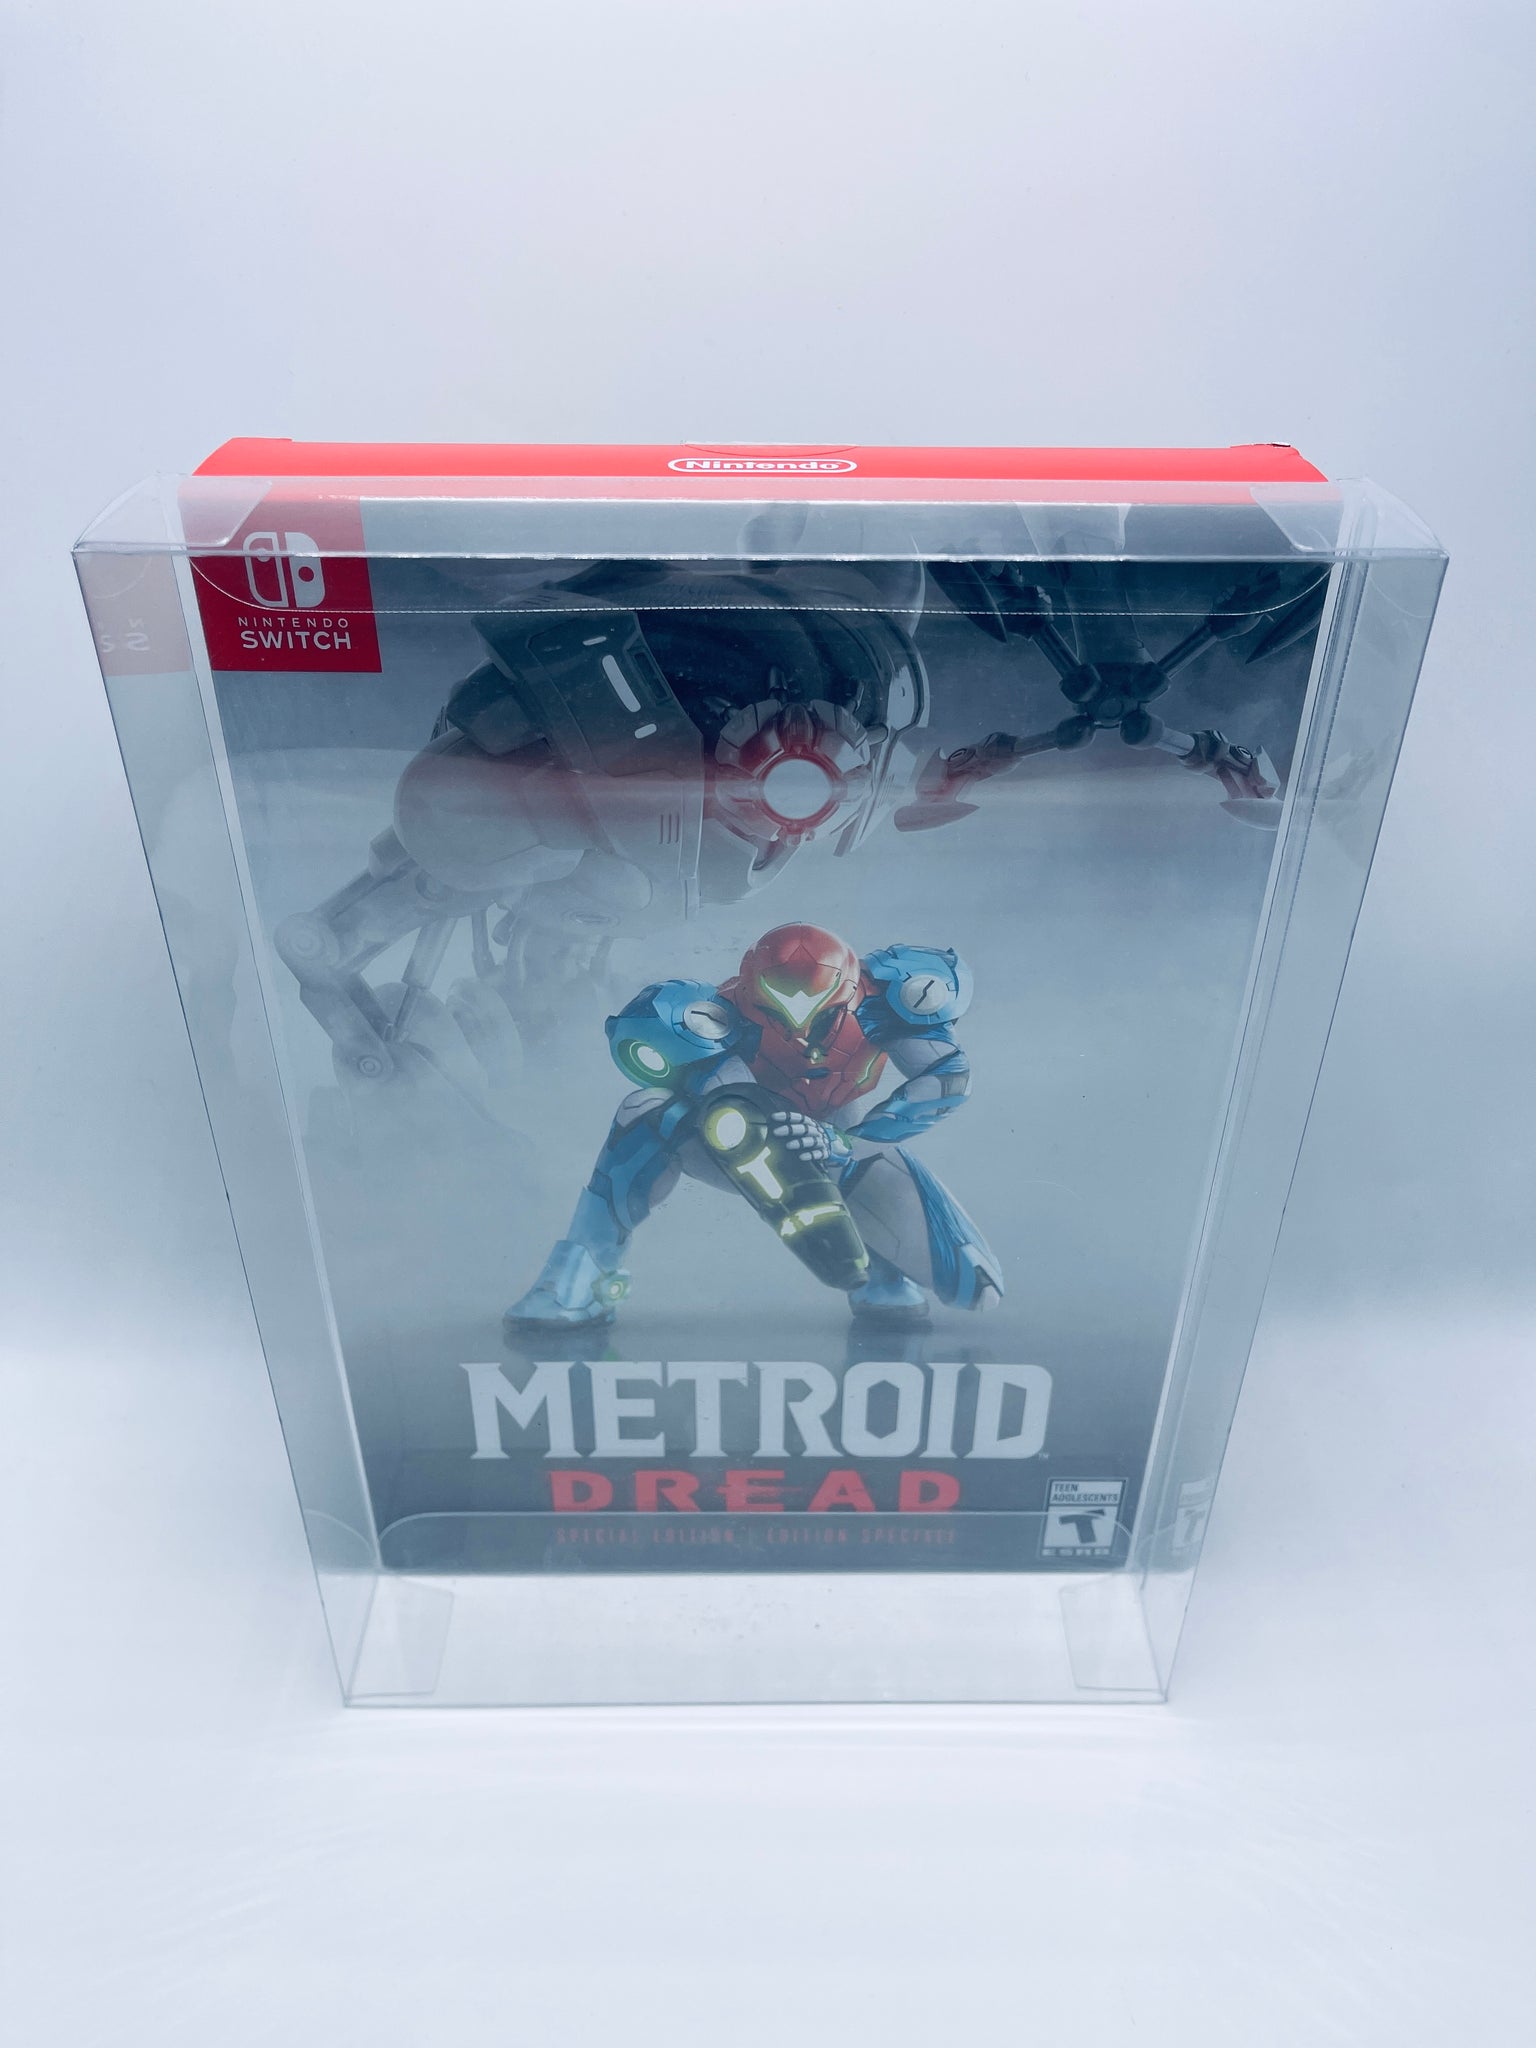 Nintendo Metroid Dread Special Edition Box Protectors made with – Kollector Protector